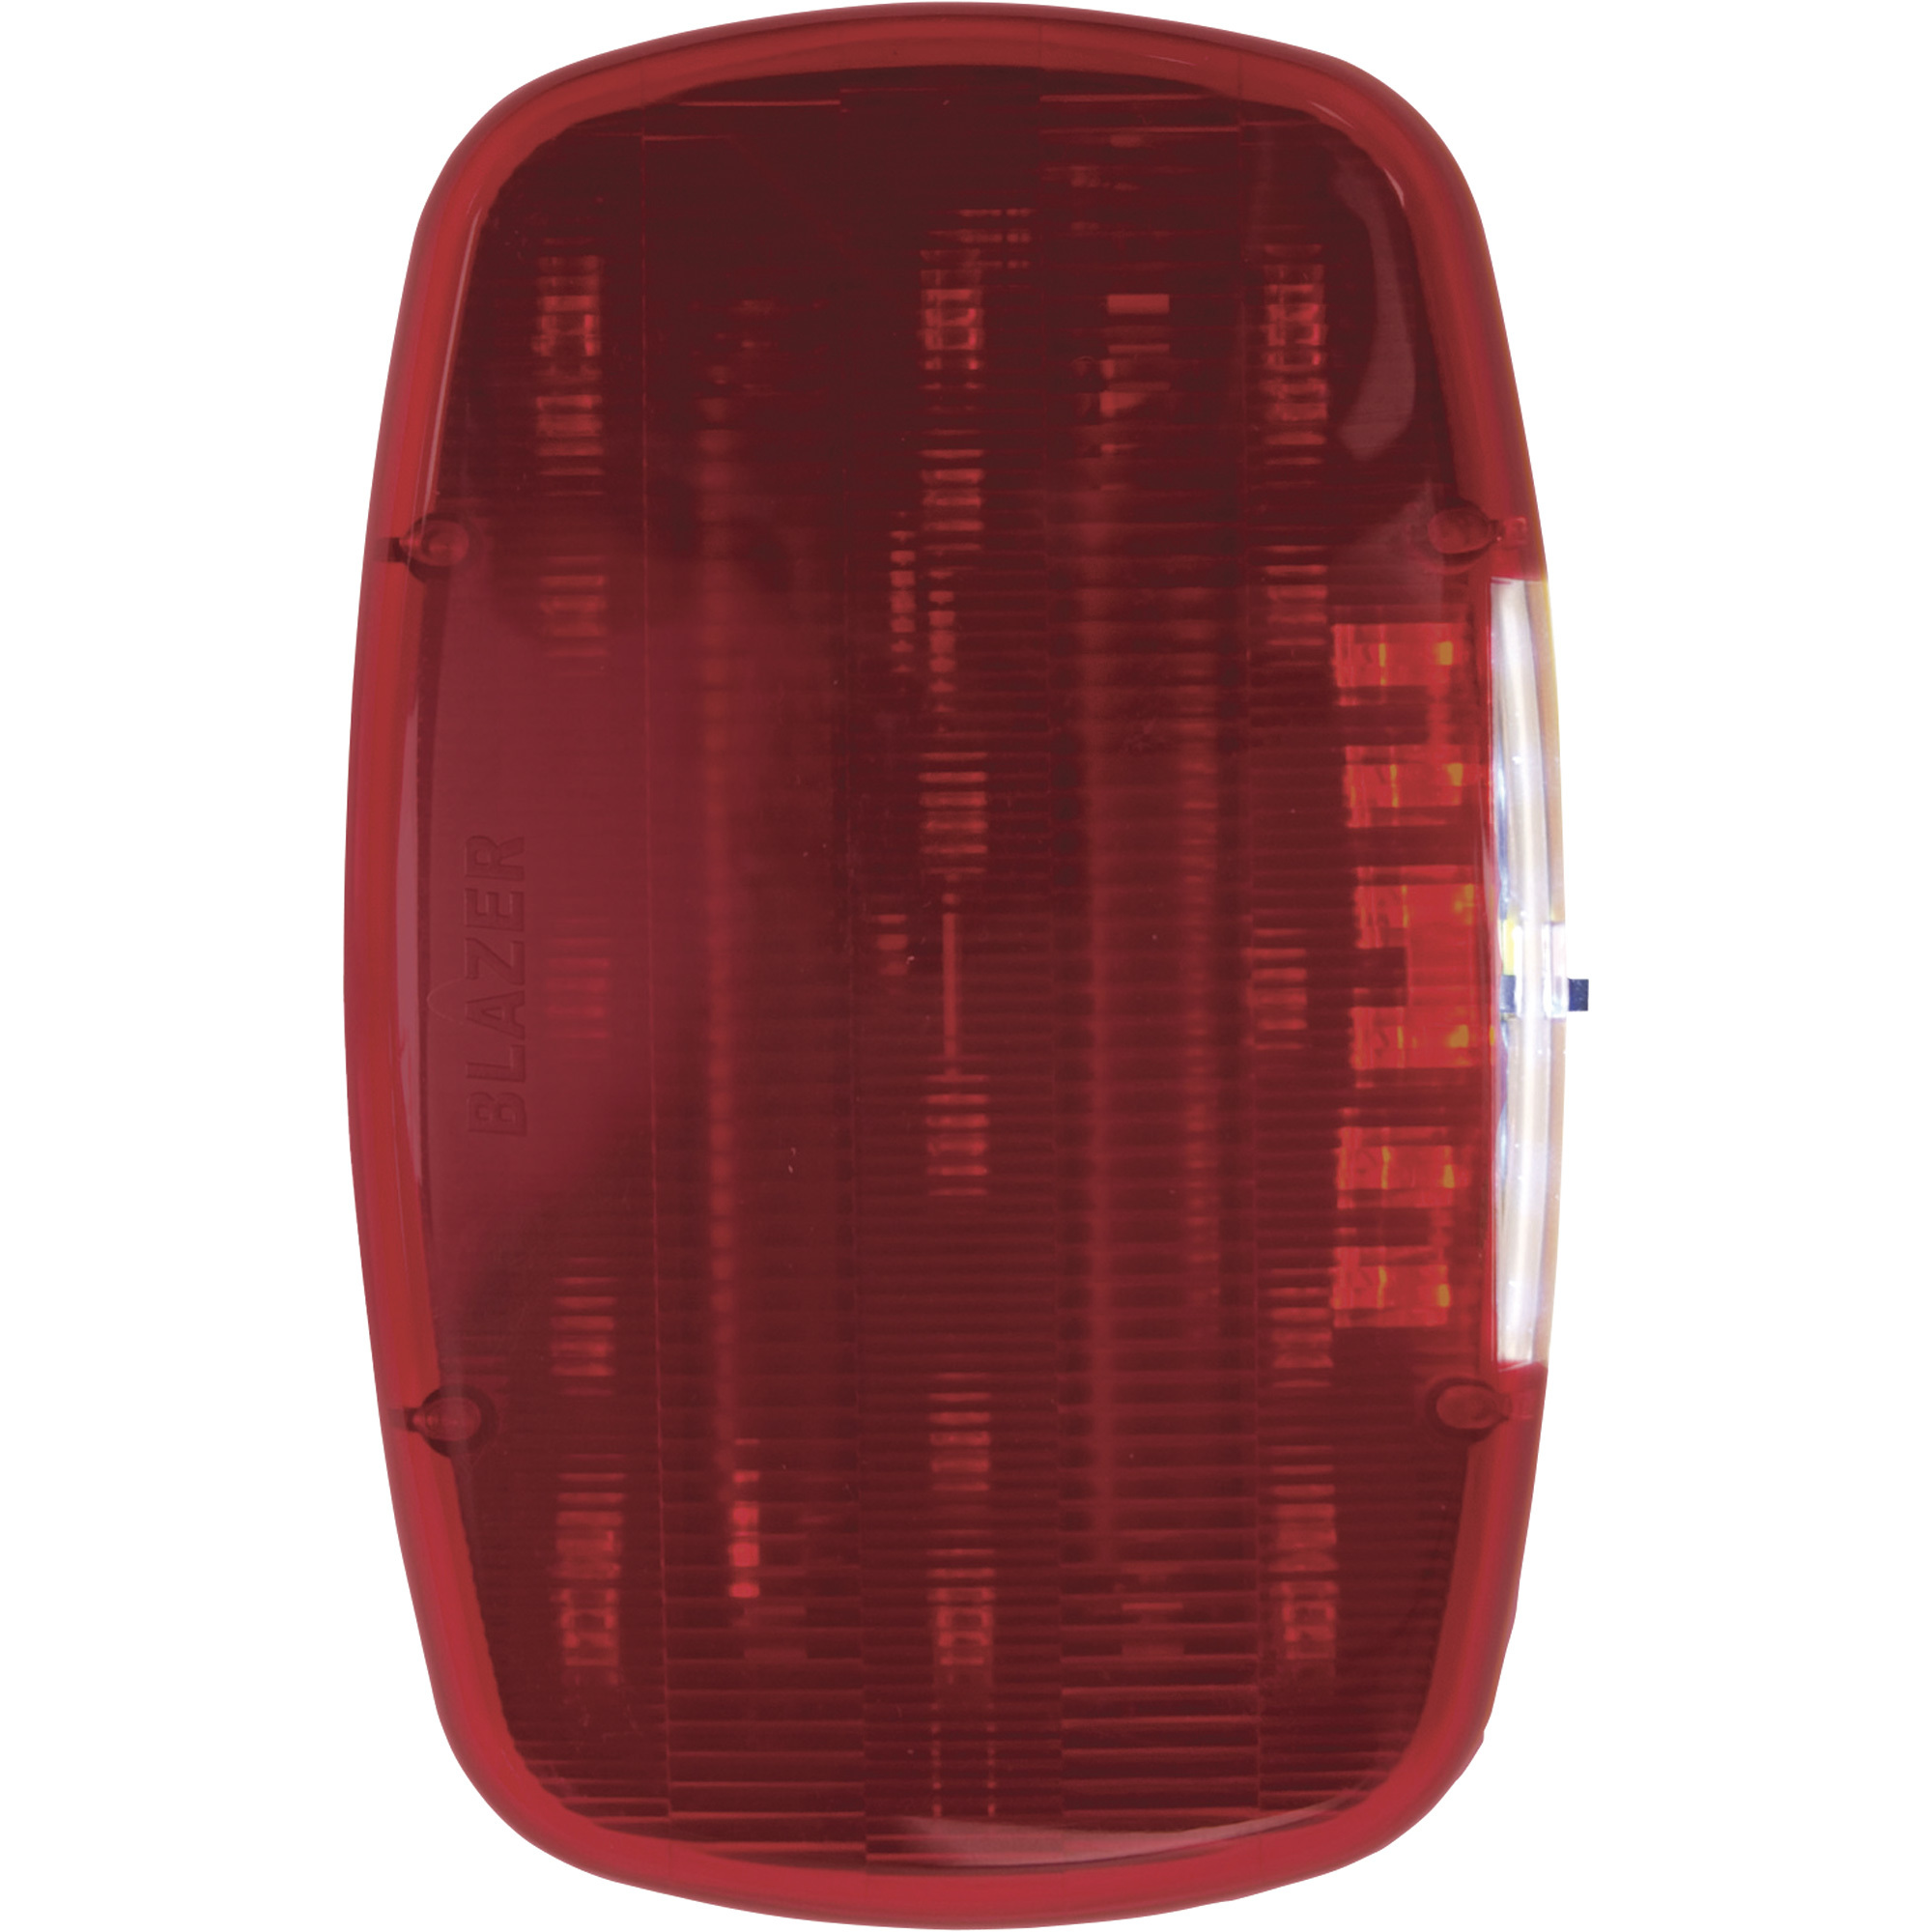 Blazer 3-Function Emergency Light â Magnetic Mount, 24 LED Diodes, Model C6355